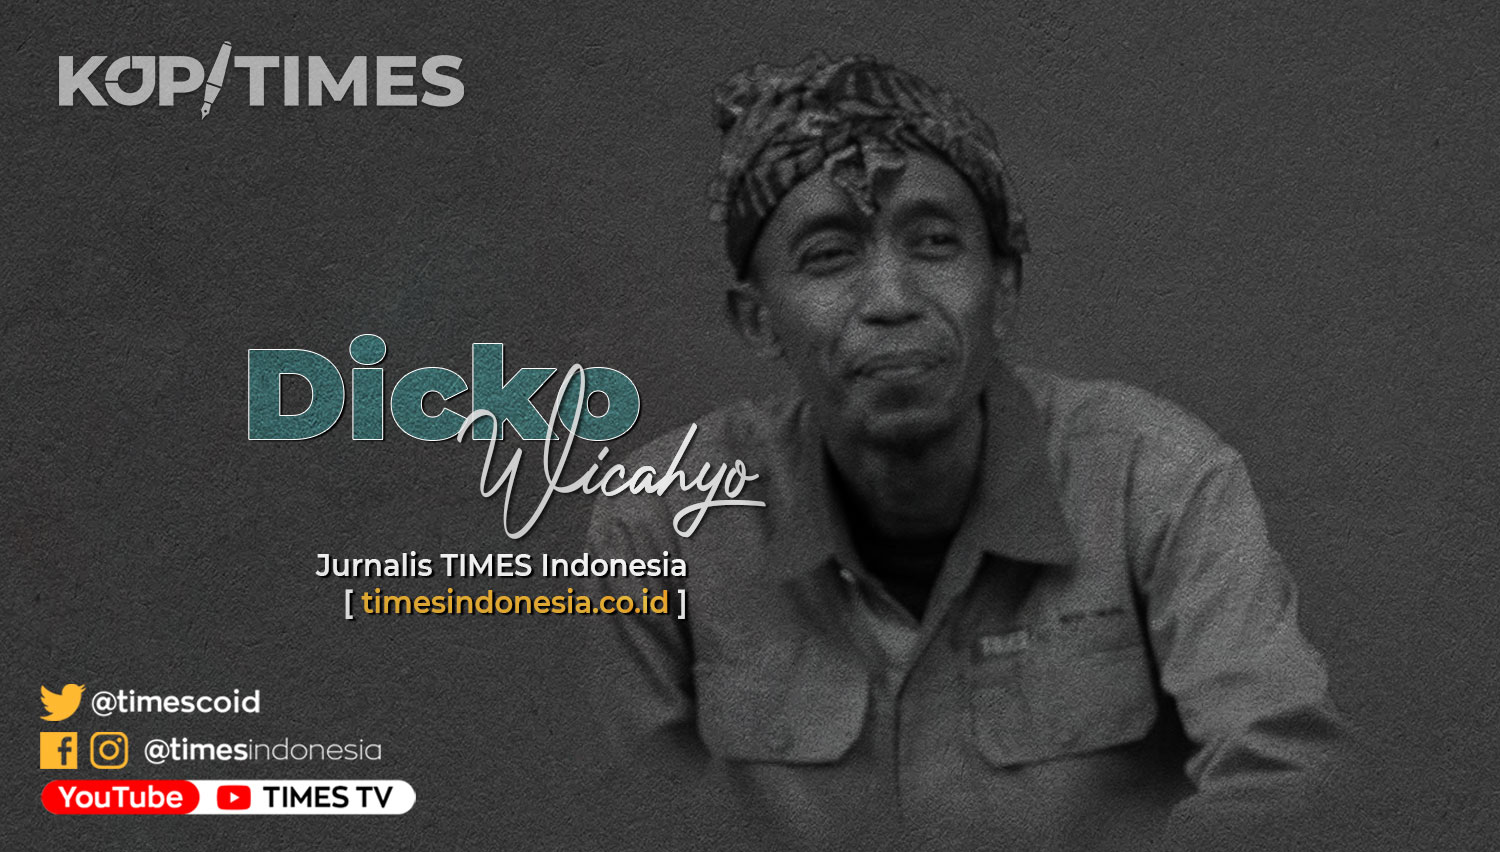 Dicko Wicahyo, Wartawan TIMES Indonesia